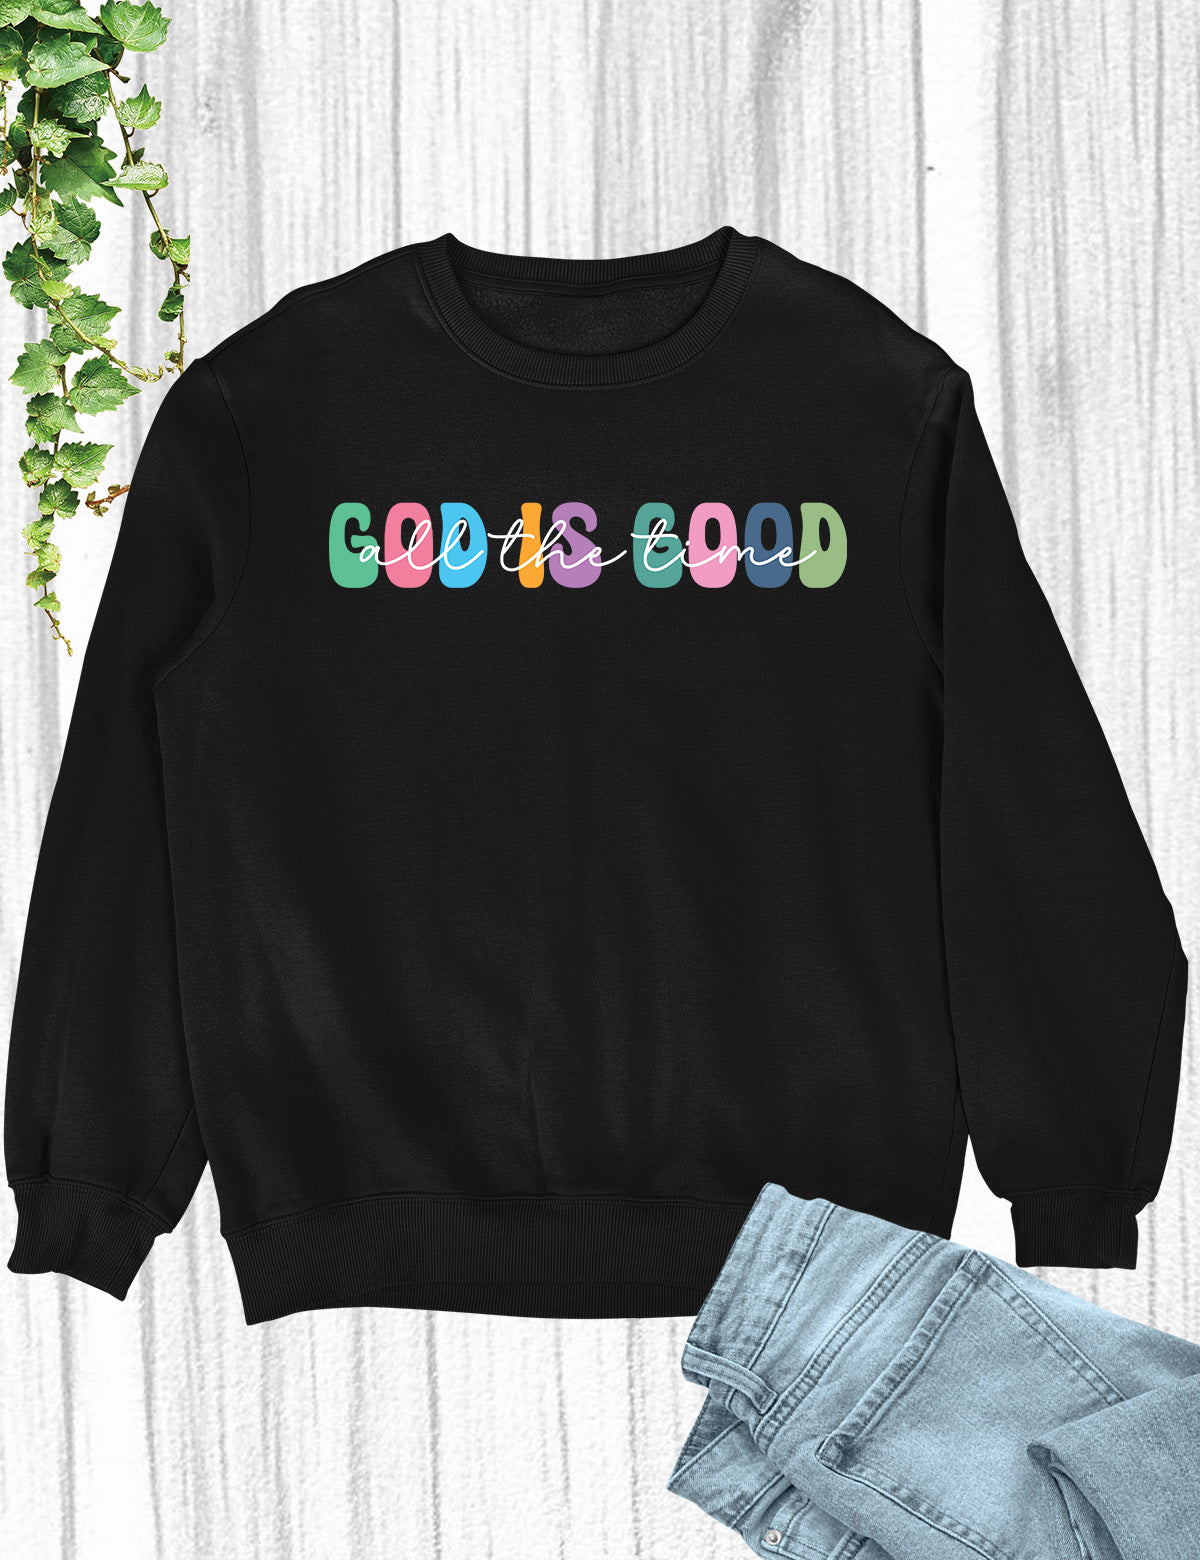 God is Good all The Time Christian Sweatshirt Apparel